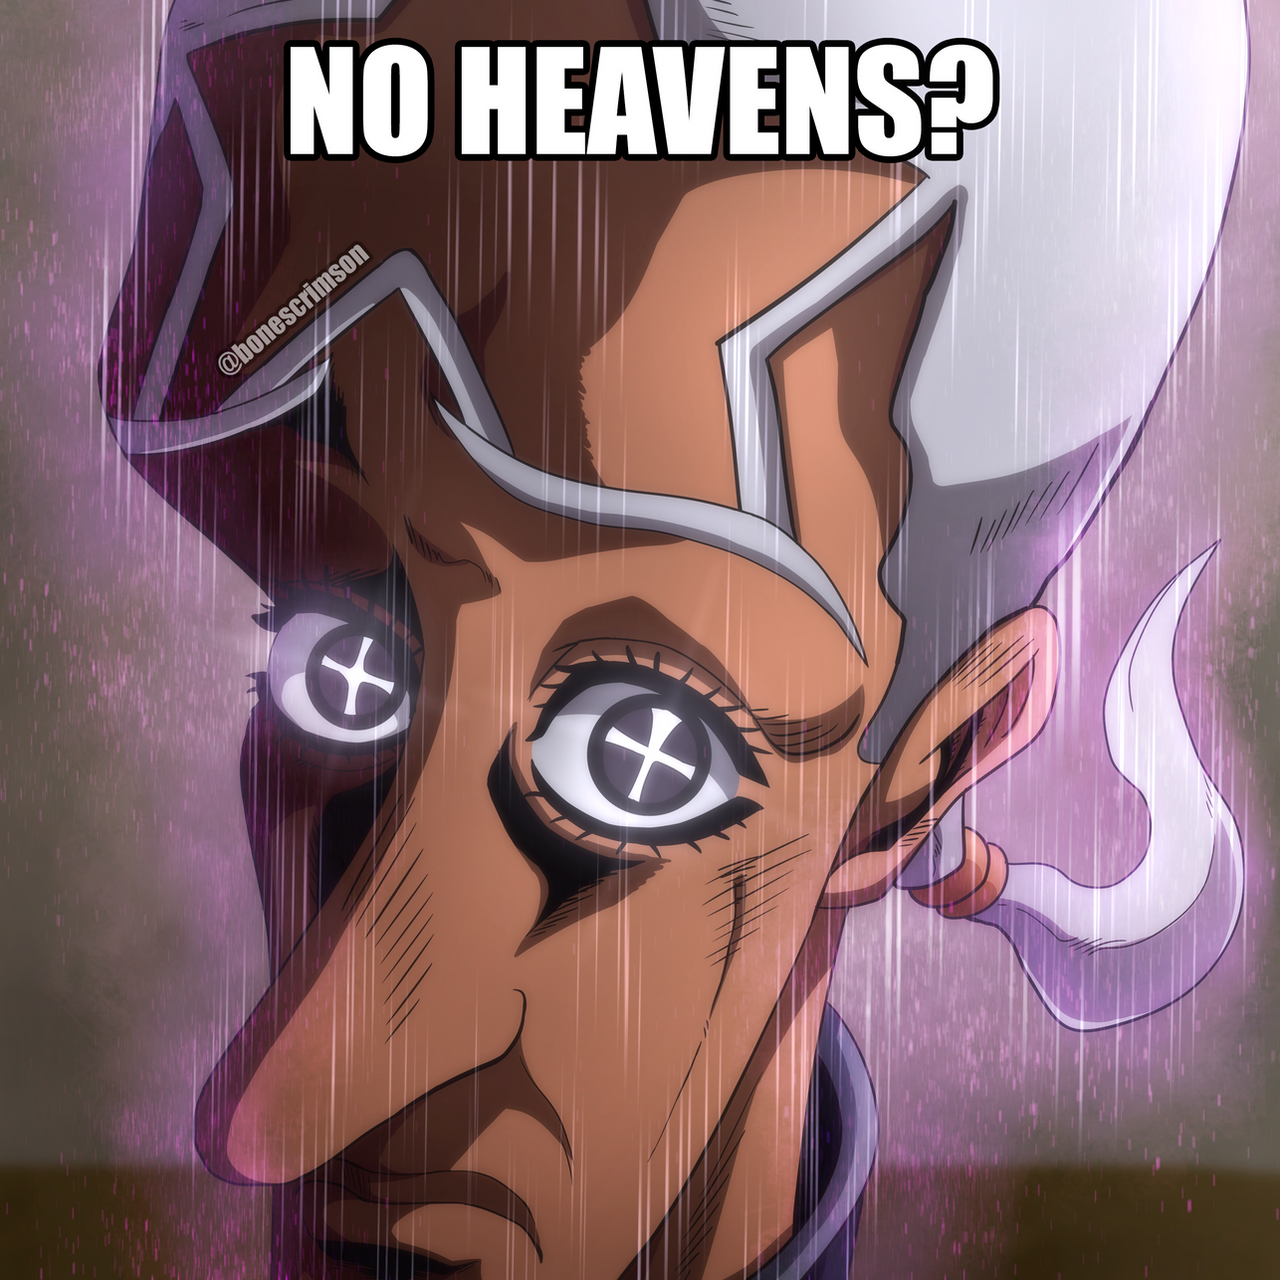 No heavens? Blank Meme Template